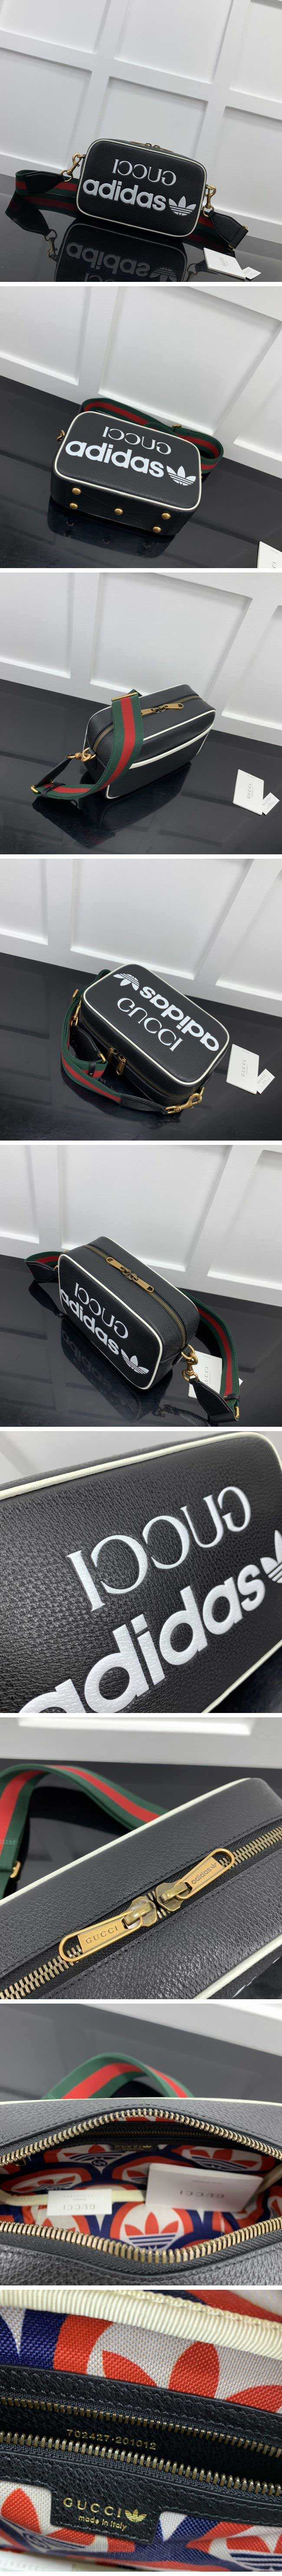 Gucci x Adidas Small Shoulder Bag Black アディダス x グッチ スモール ショルダーバッグ ブラック【N級】